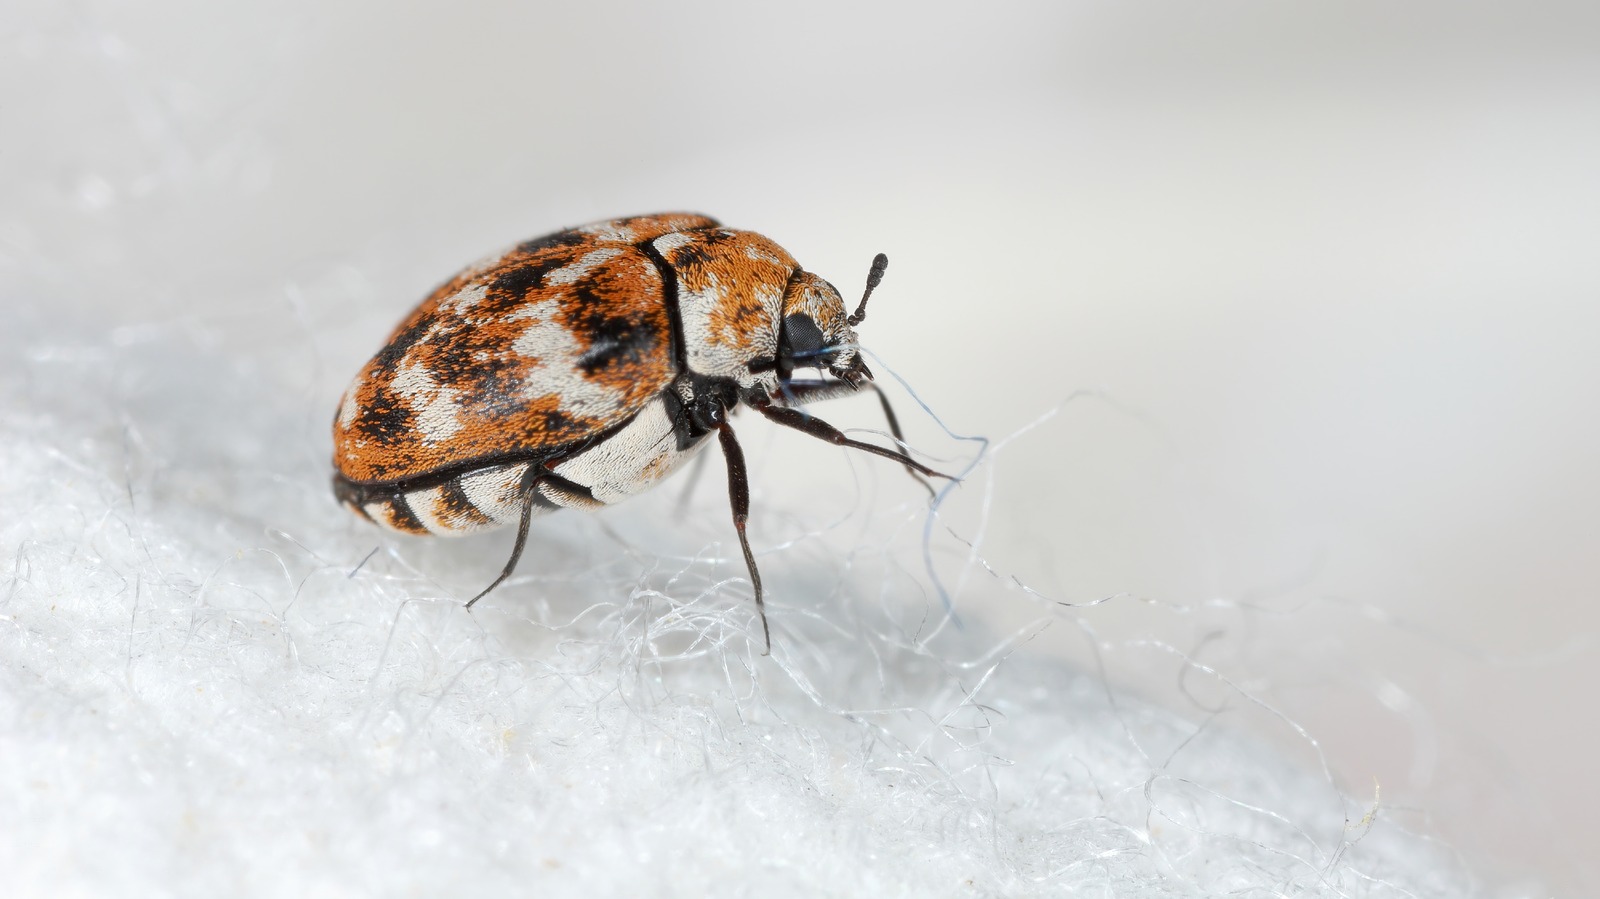 Carpet Beetles Are No Innocent Pest